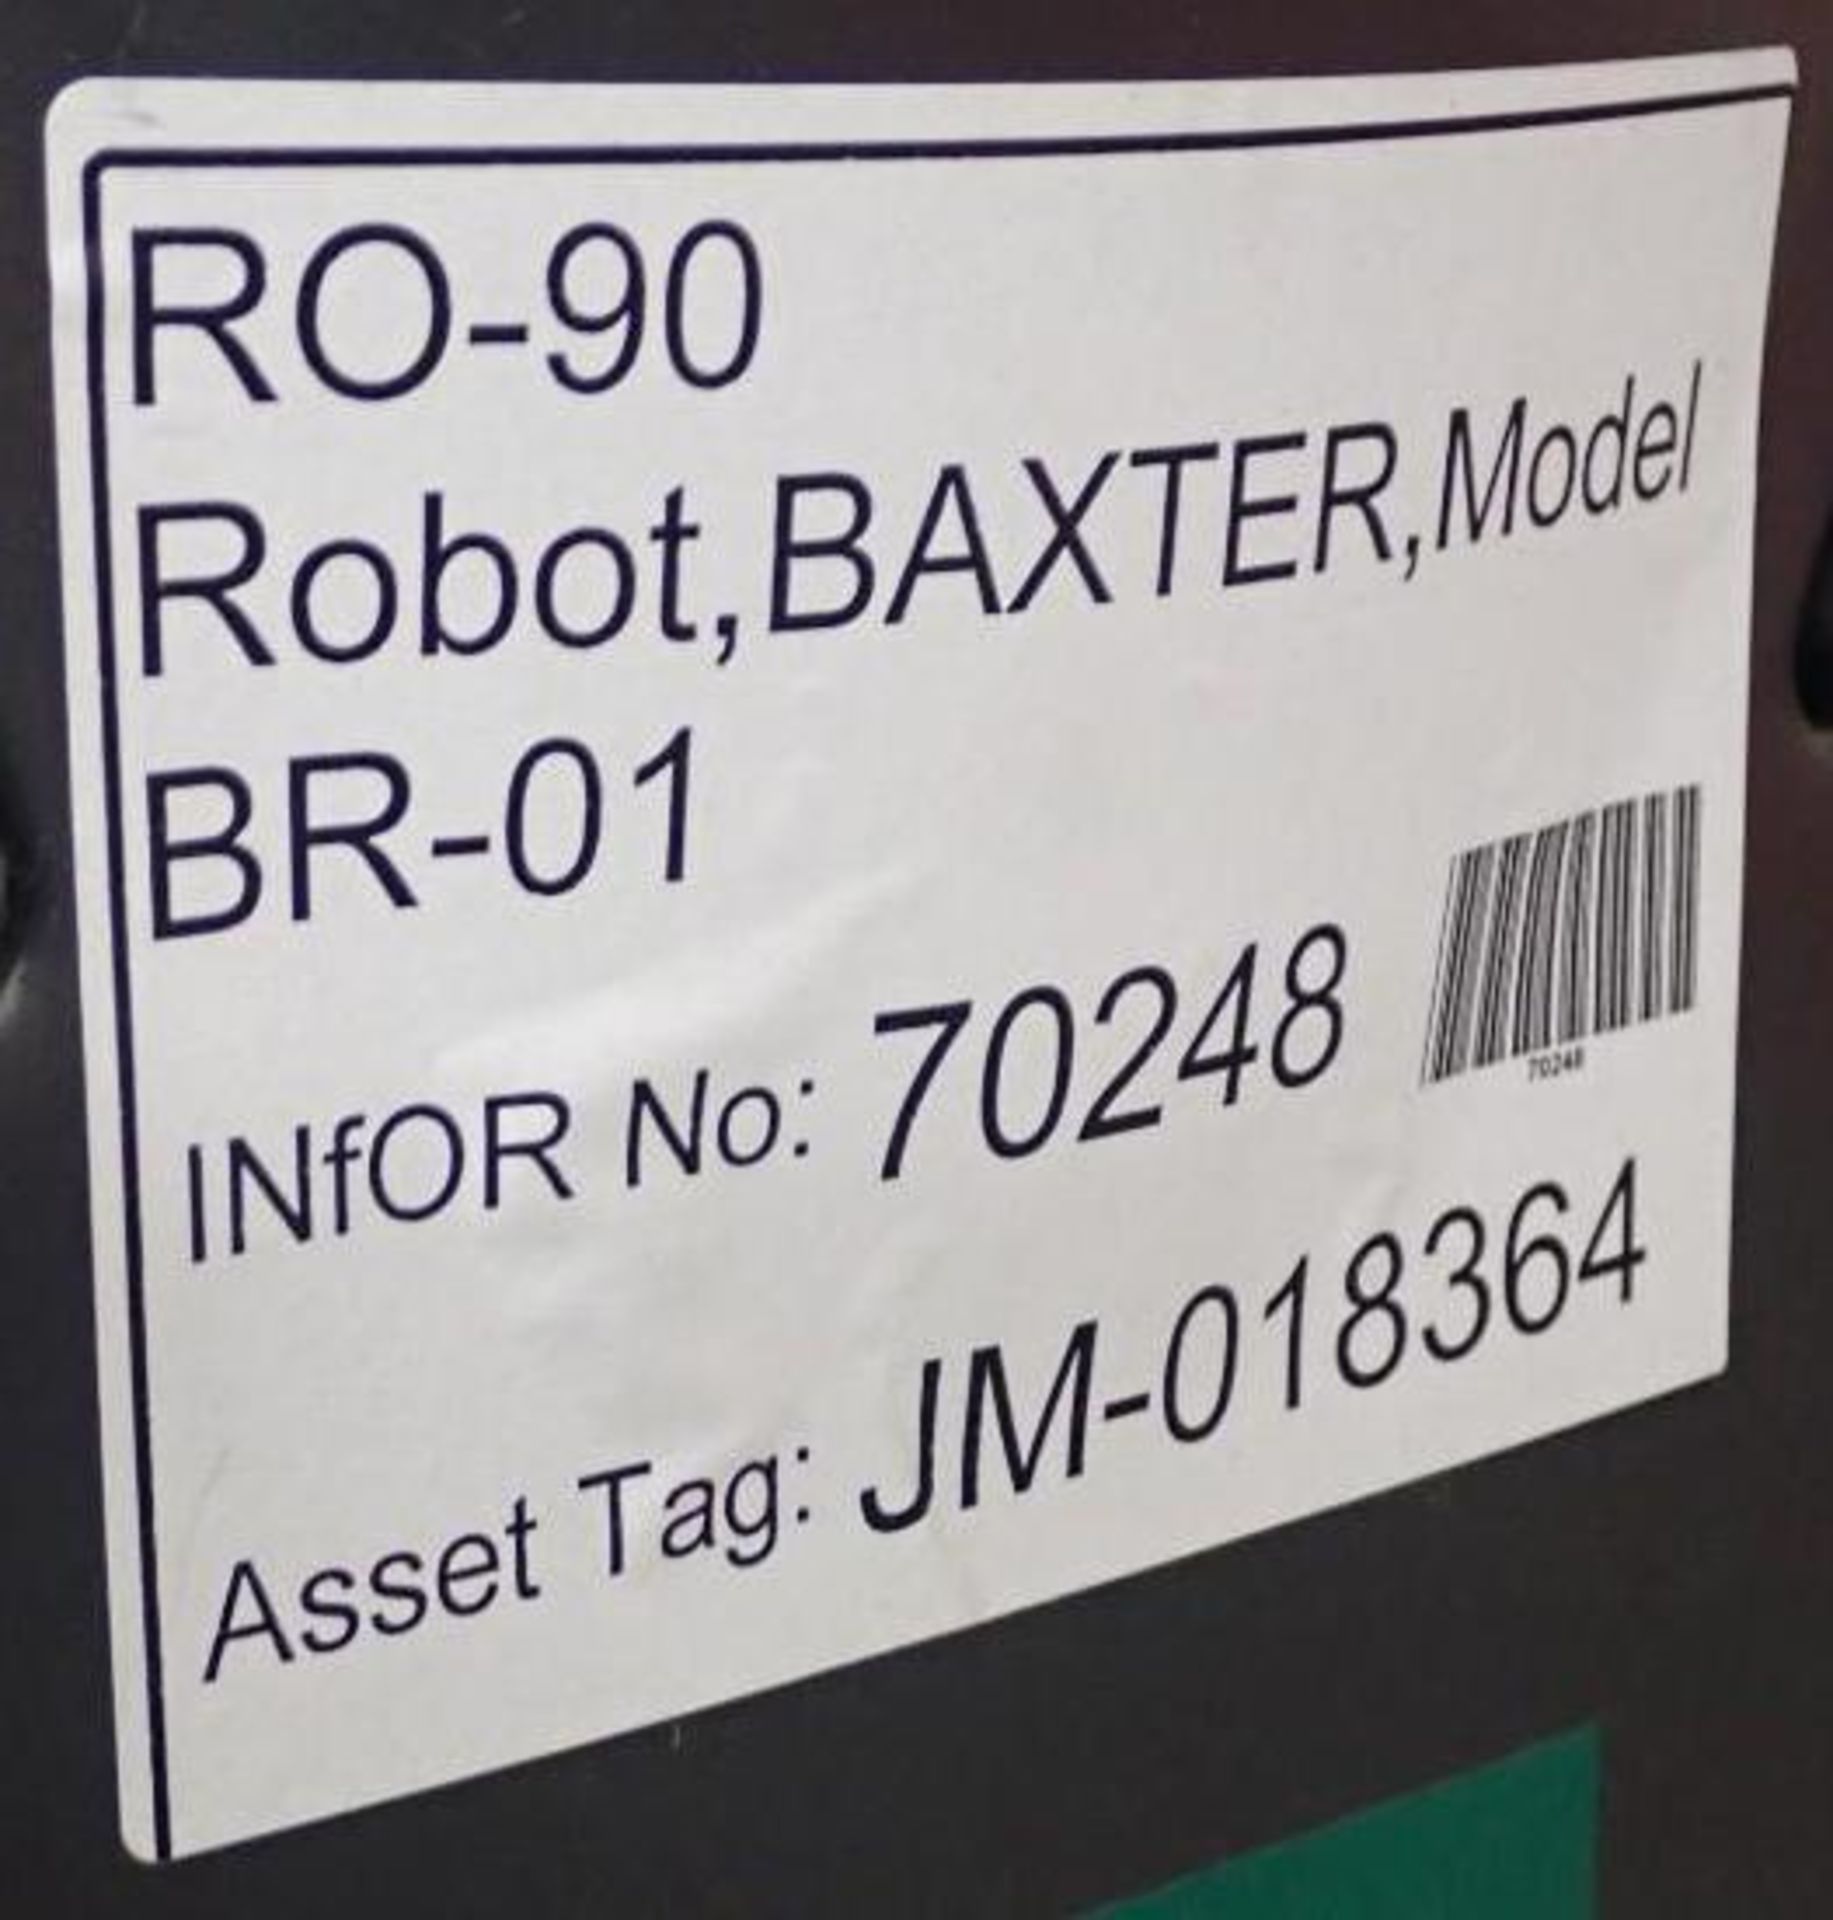 Lot of Rethink Robotics BAXTER Robots & Parts - Image 4 of 8